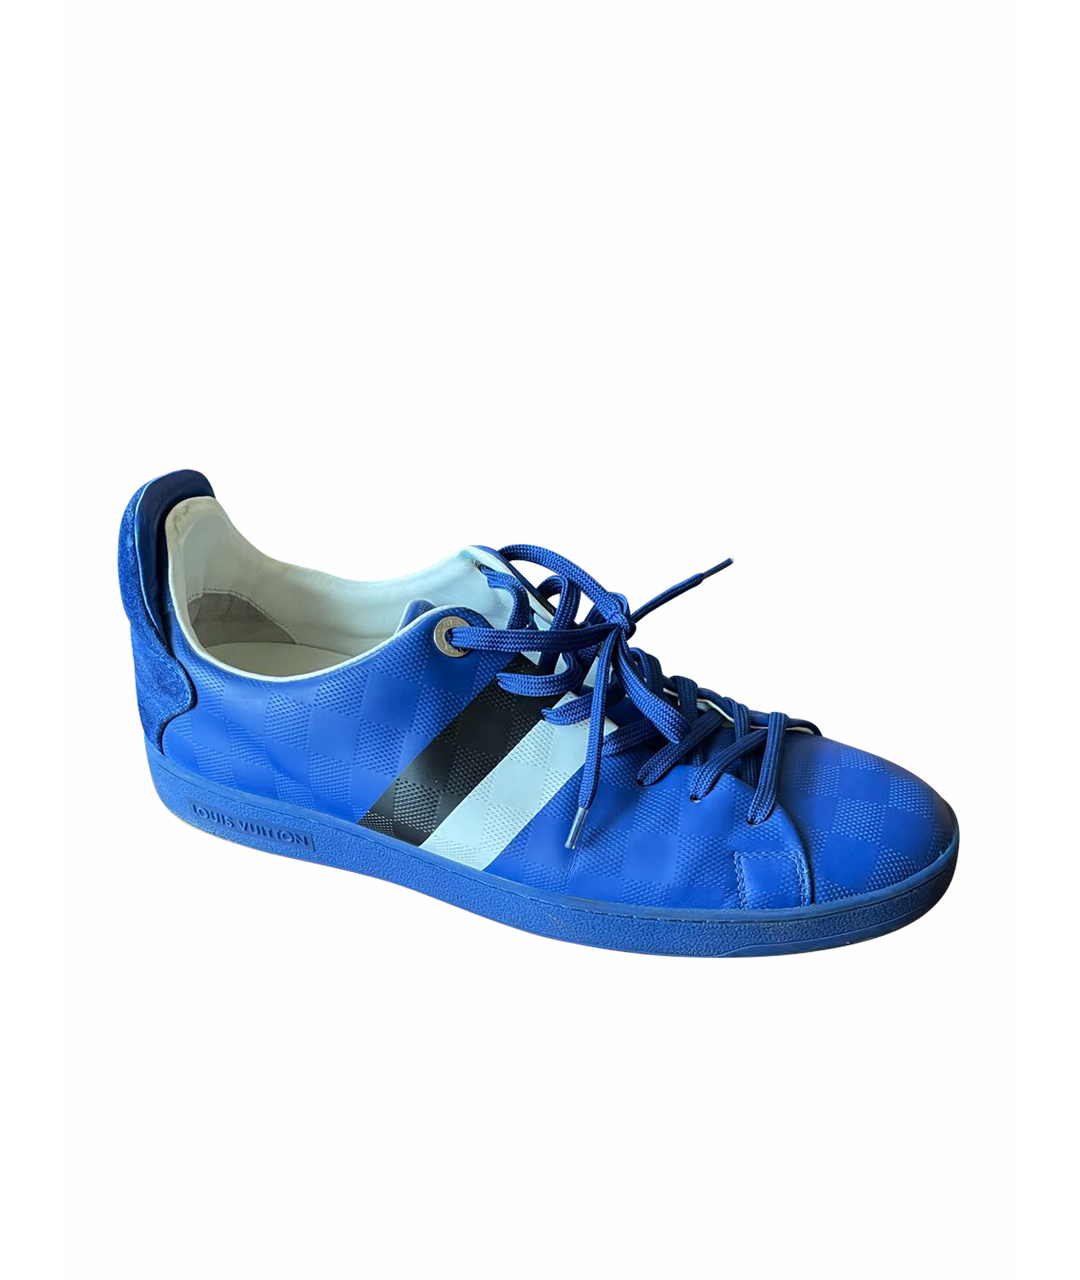 LOUIS VUITTON PRE-OWNED Синие кожаные низкие кроссовки / кеды, фото 1